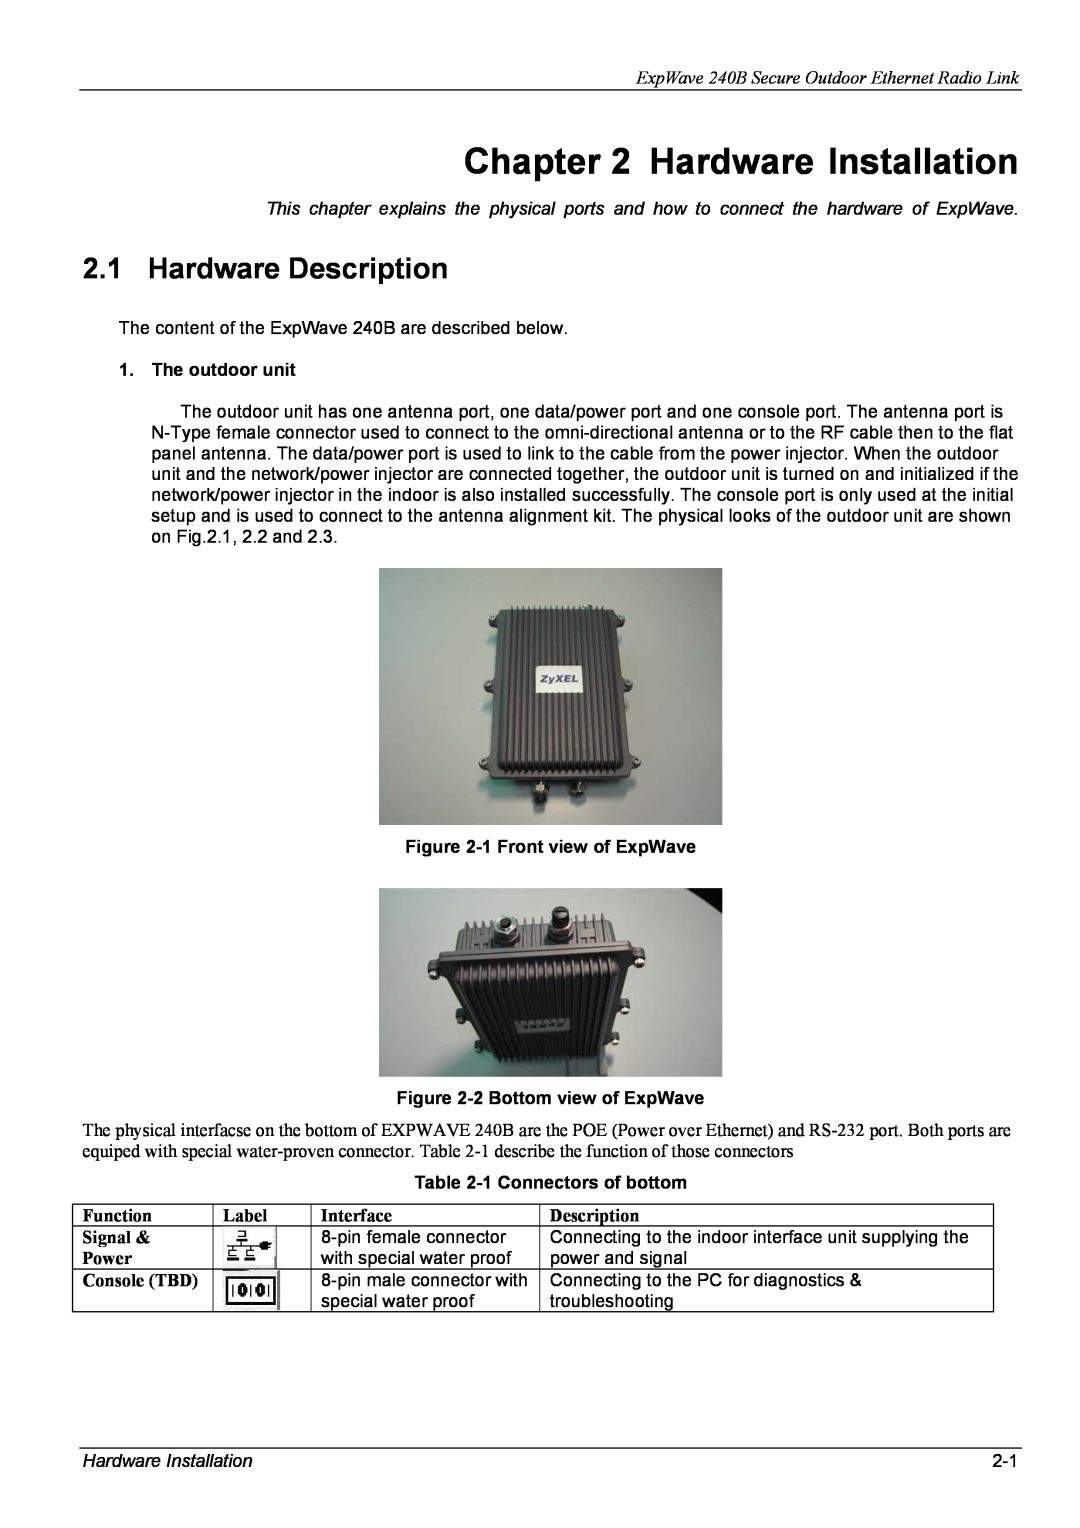 ZyXEL Communications manual Hardware Installation, Hardware Description, ExpWave 240B Secure Outdoor Ethernet Radio Link 